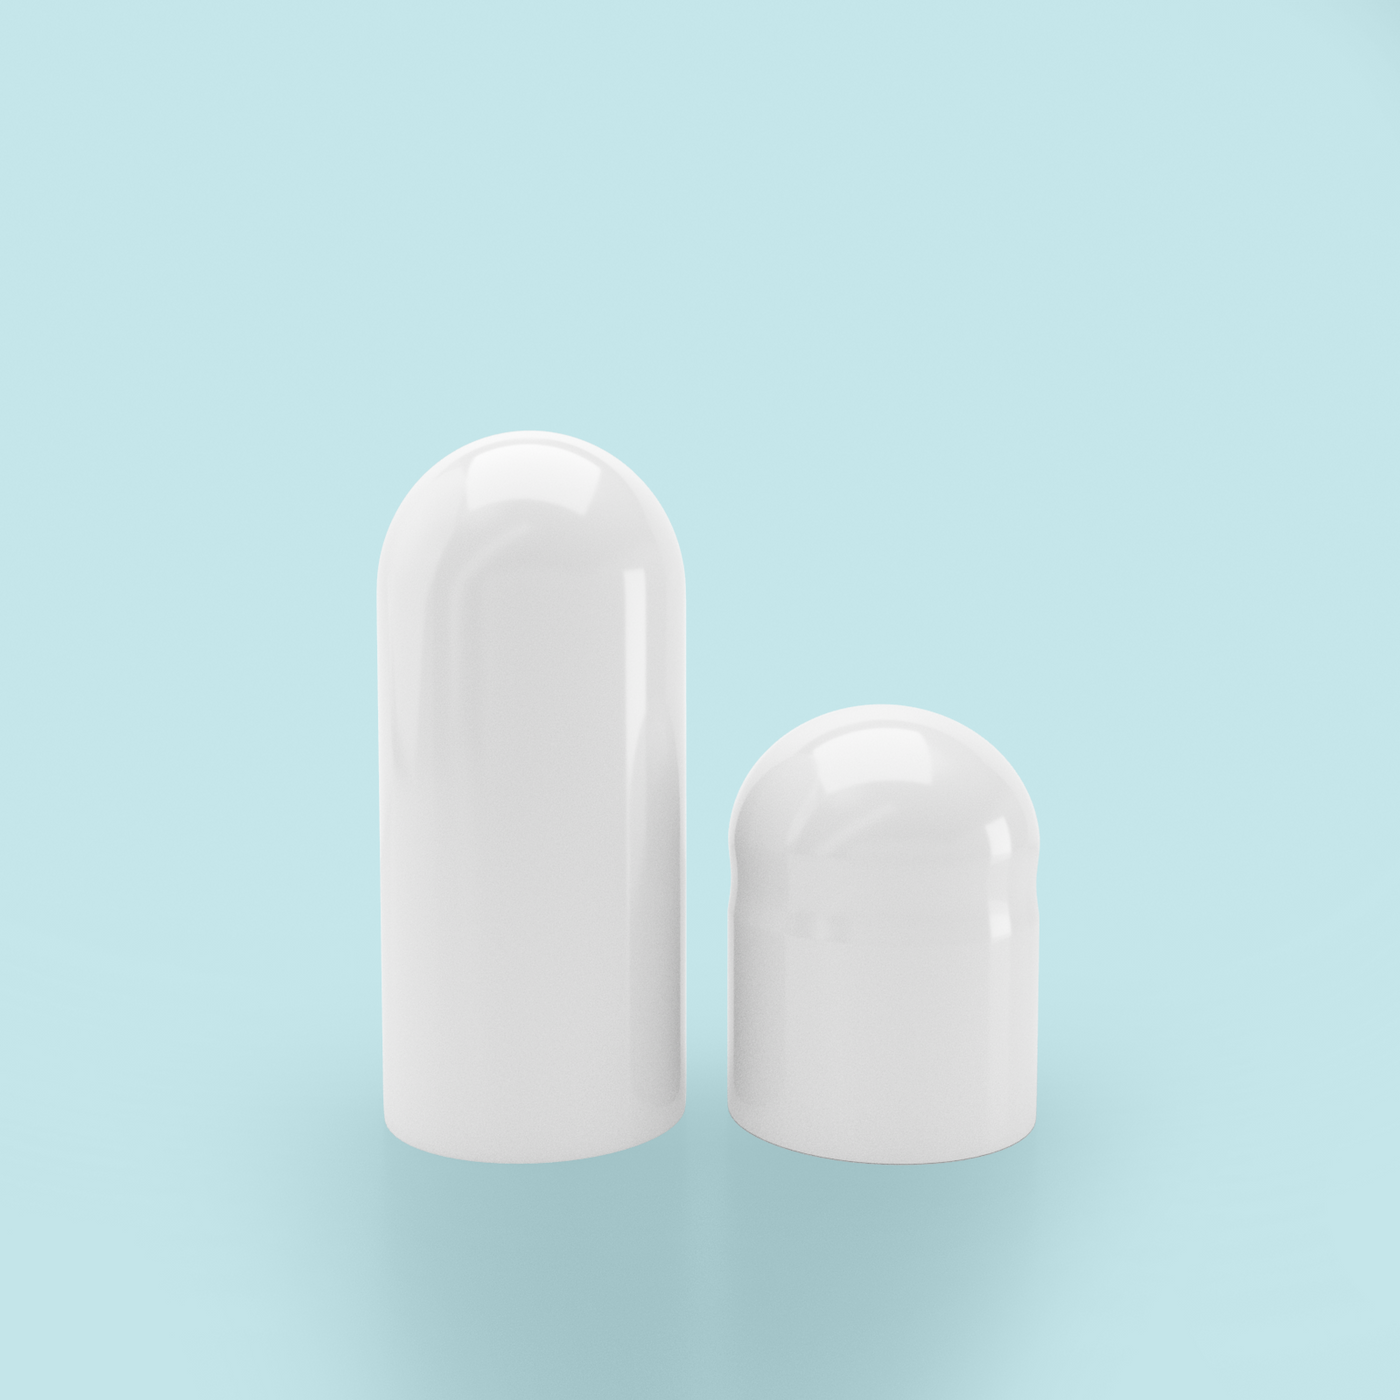 Colored Vegetarian Acid Resistant Enteric Empty Capsules Size 1 White/White (Box of 125,000) - White